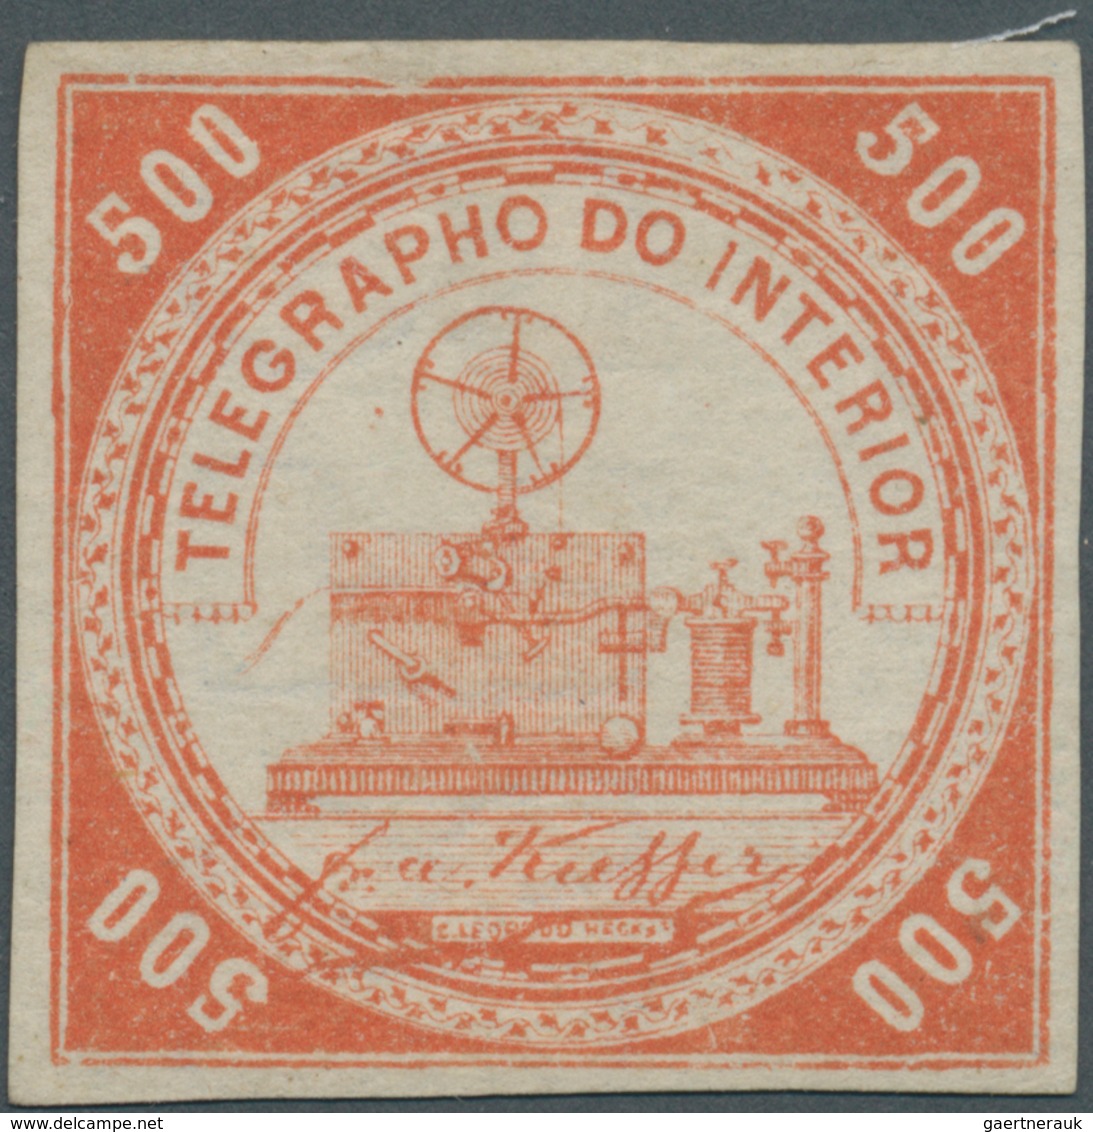 00587 Brasilien - Telegrafenmarken: 1873, 500r. Vermilion, Wm "Lacroix Freres", Fresh Colour, Full Margins - Telegraph